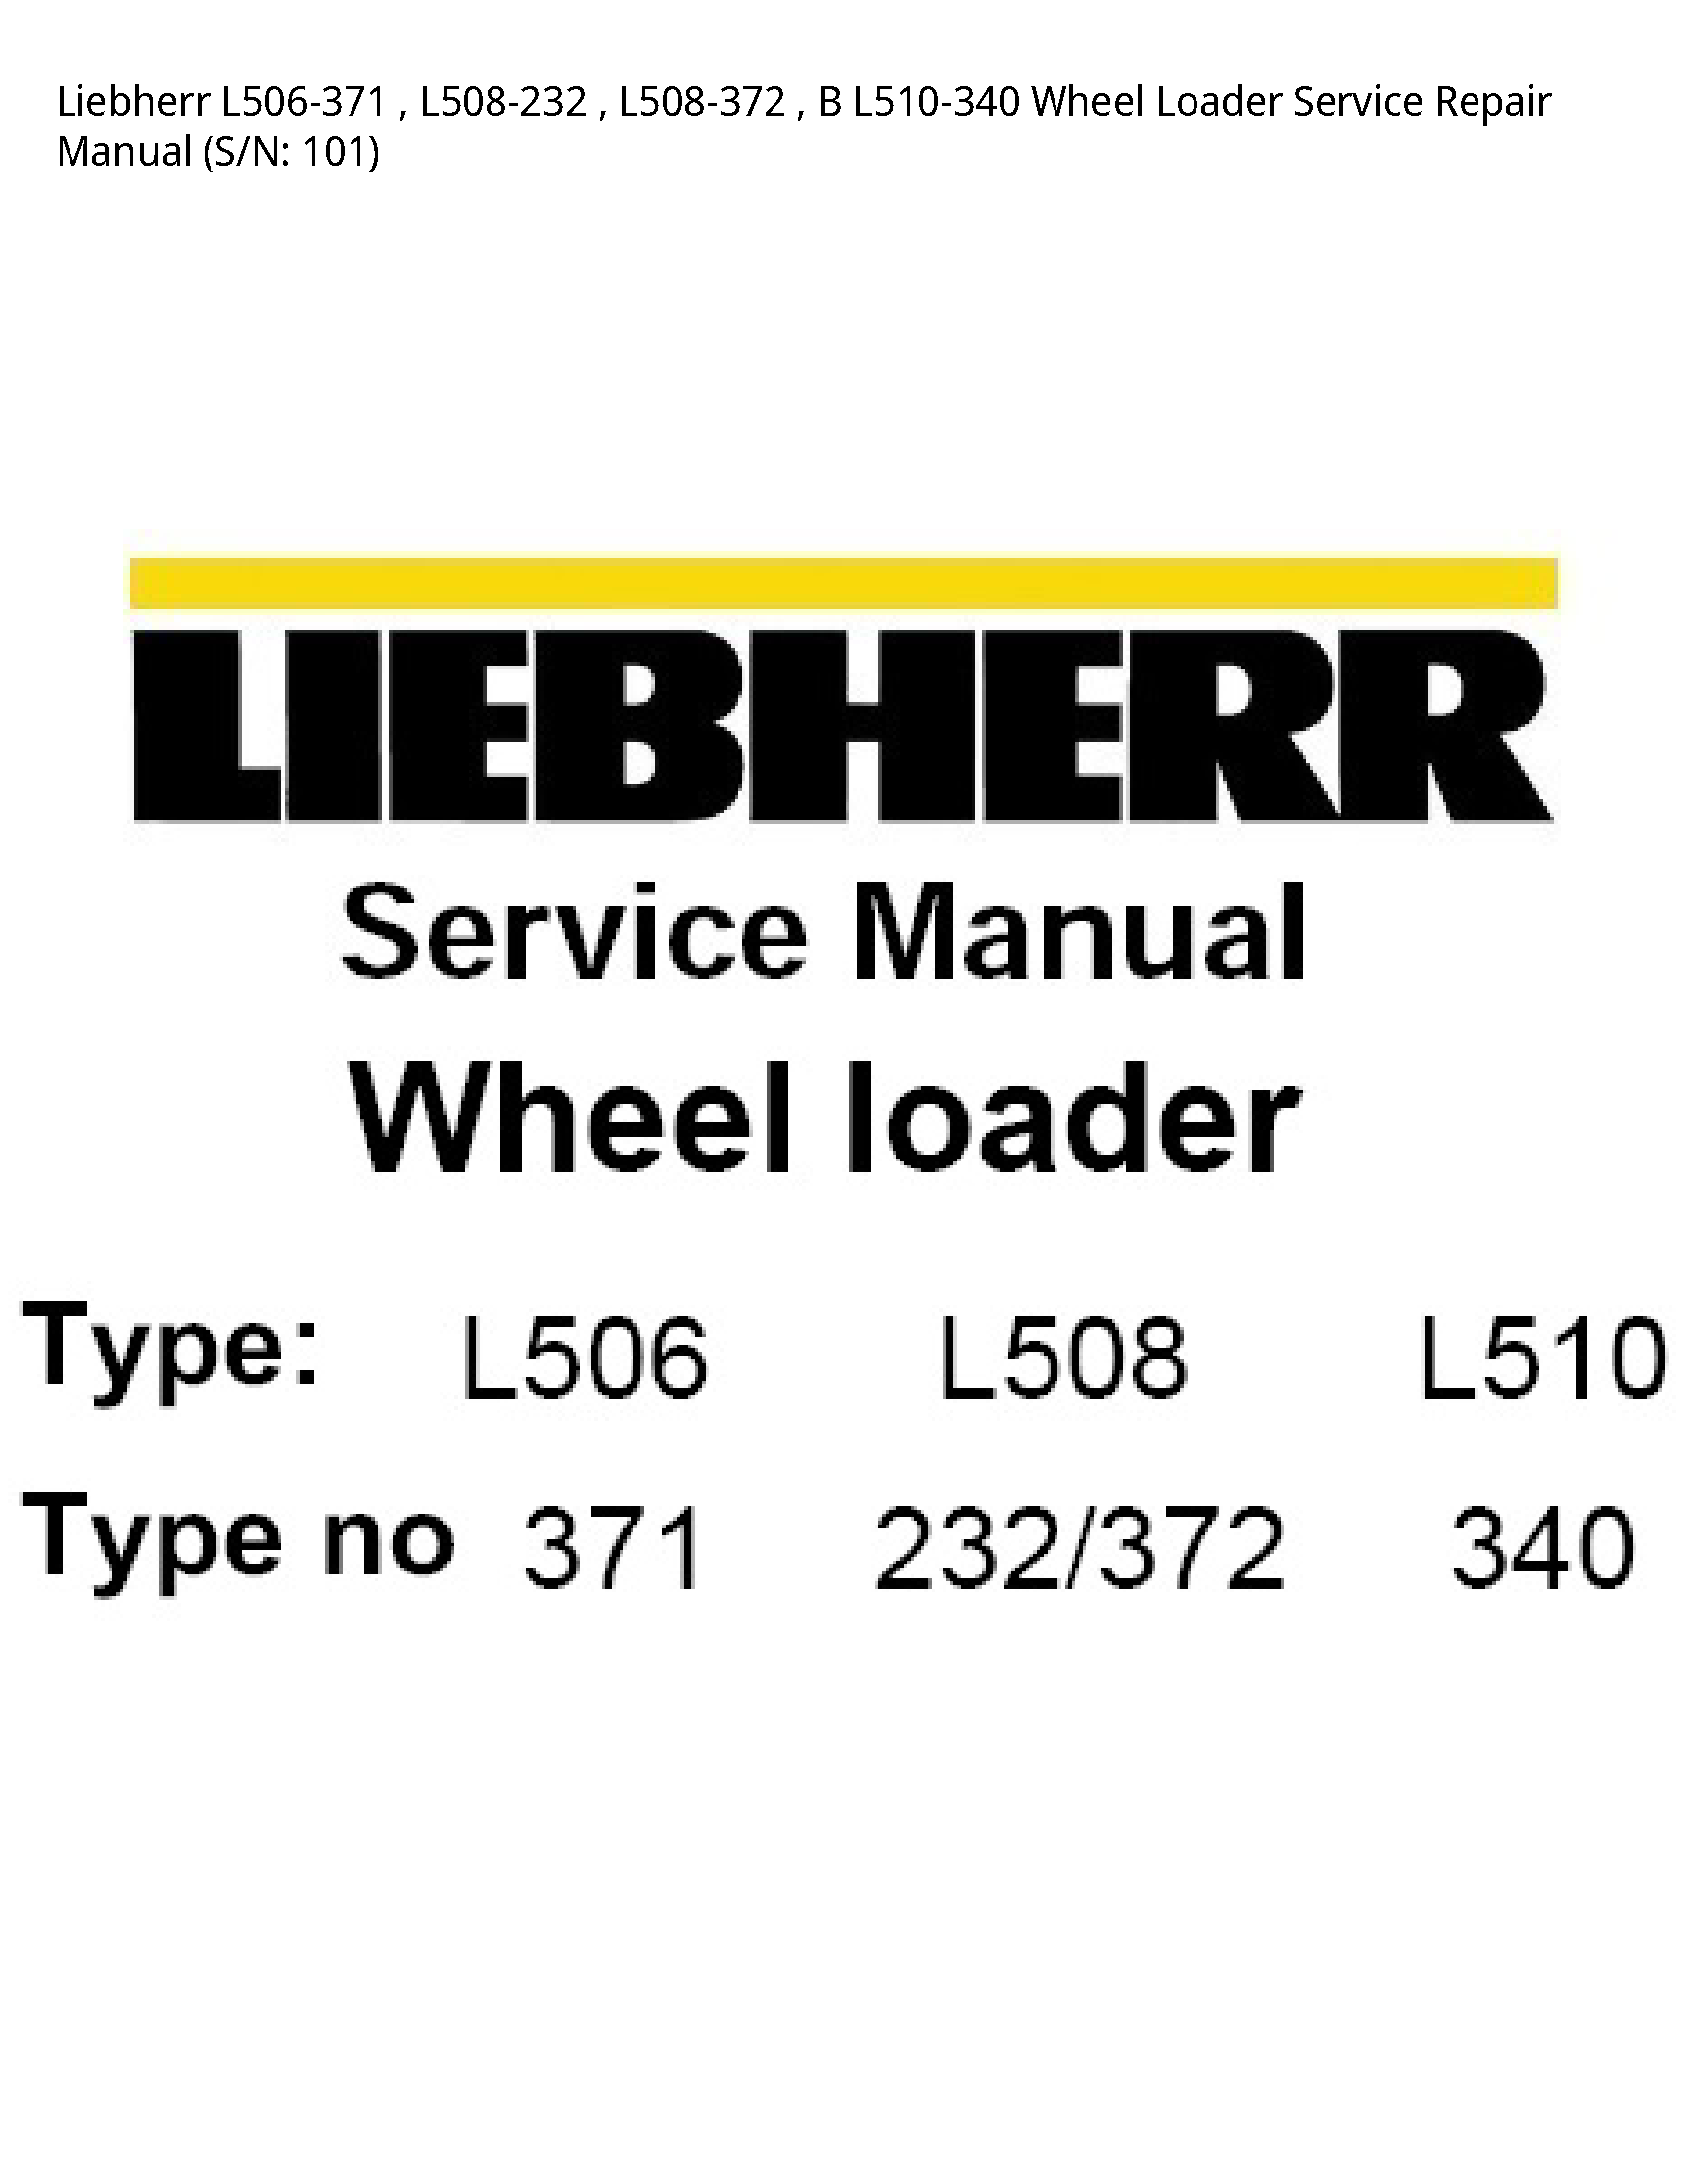 Liebherr L506-371 Wheel Loader manual